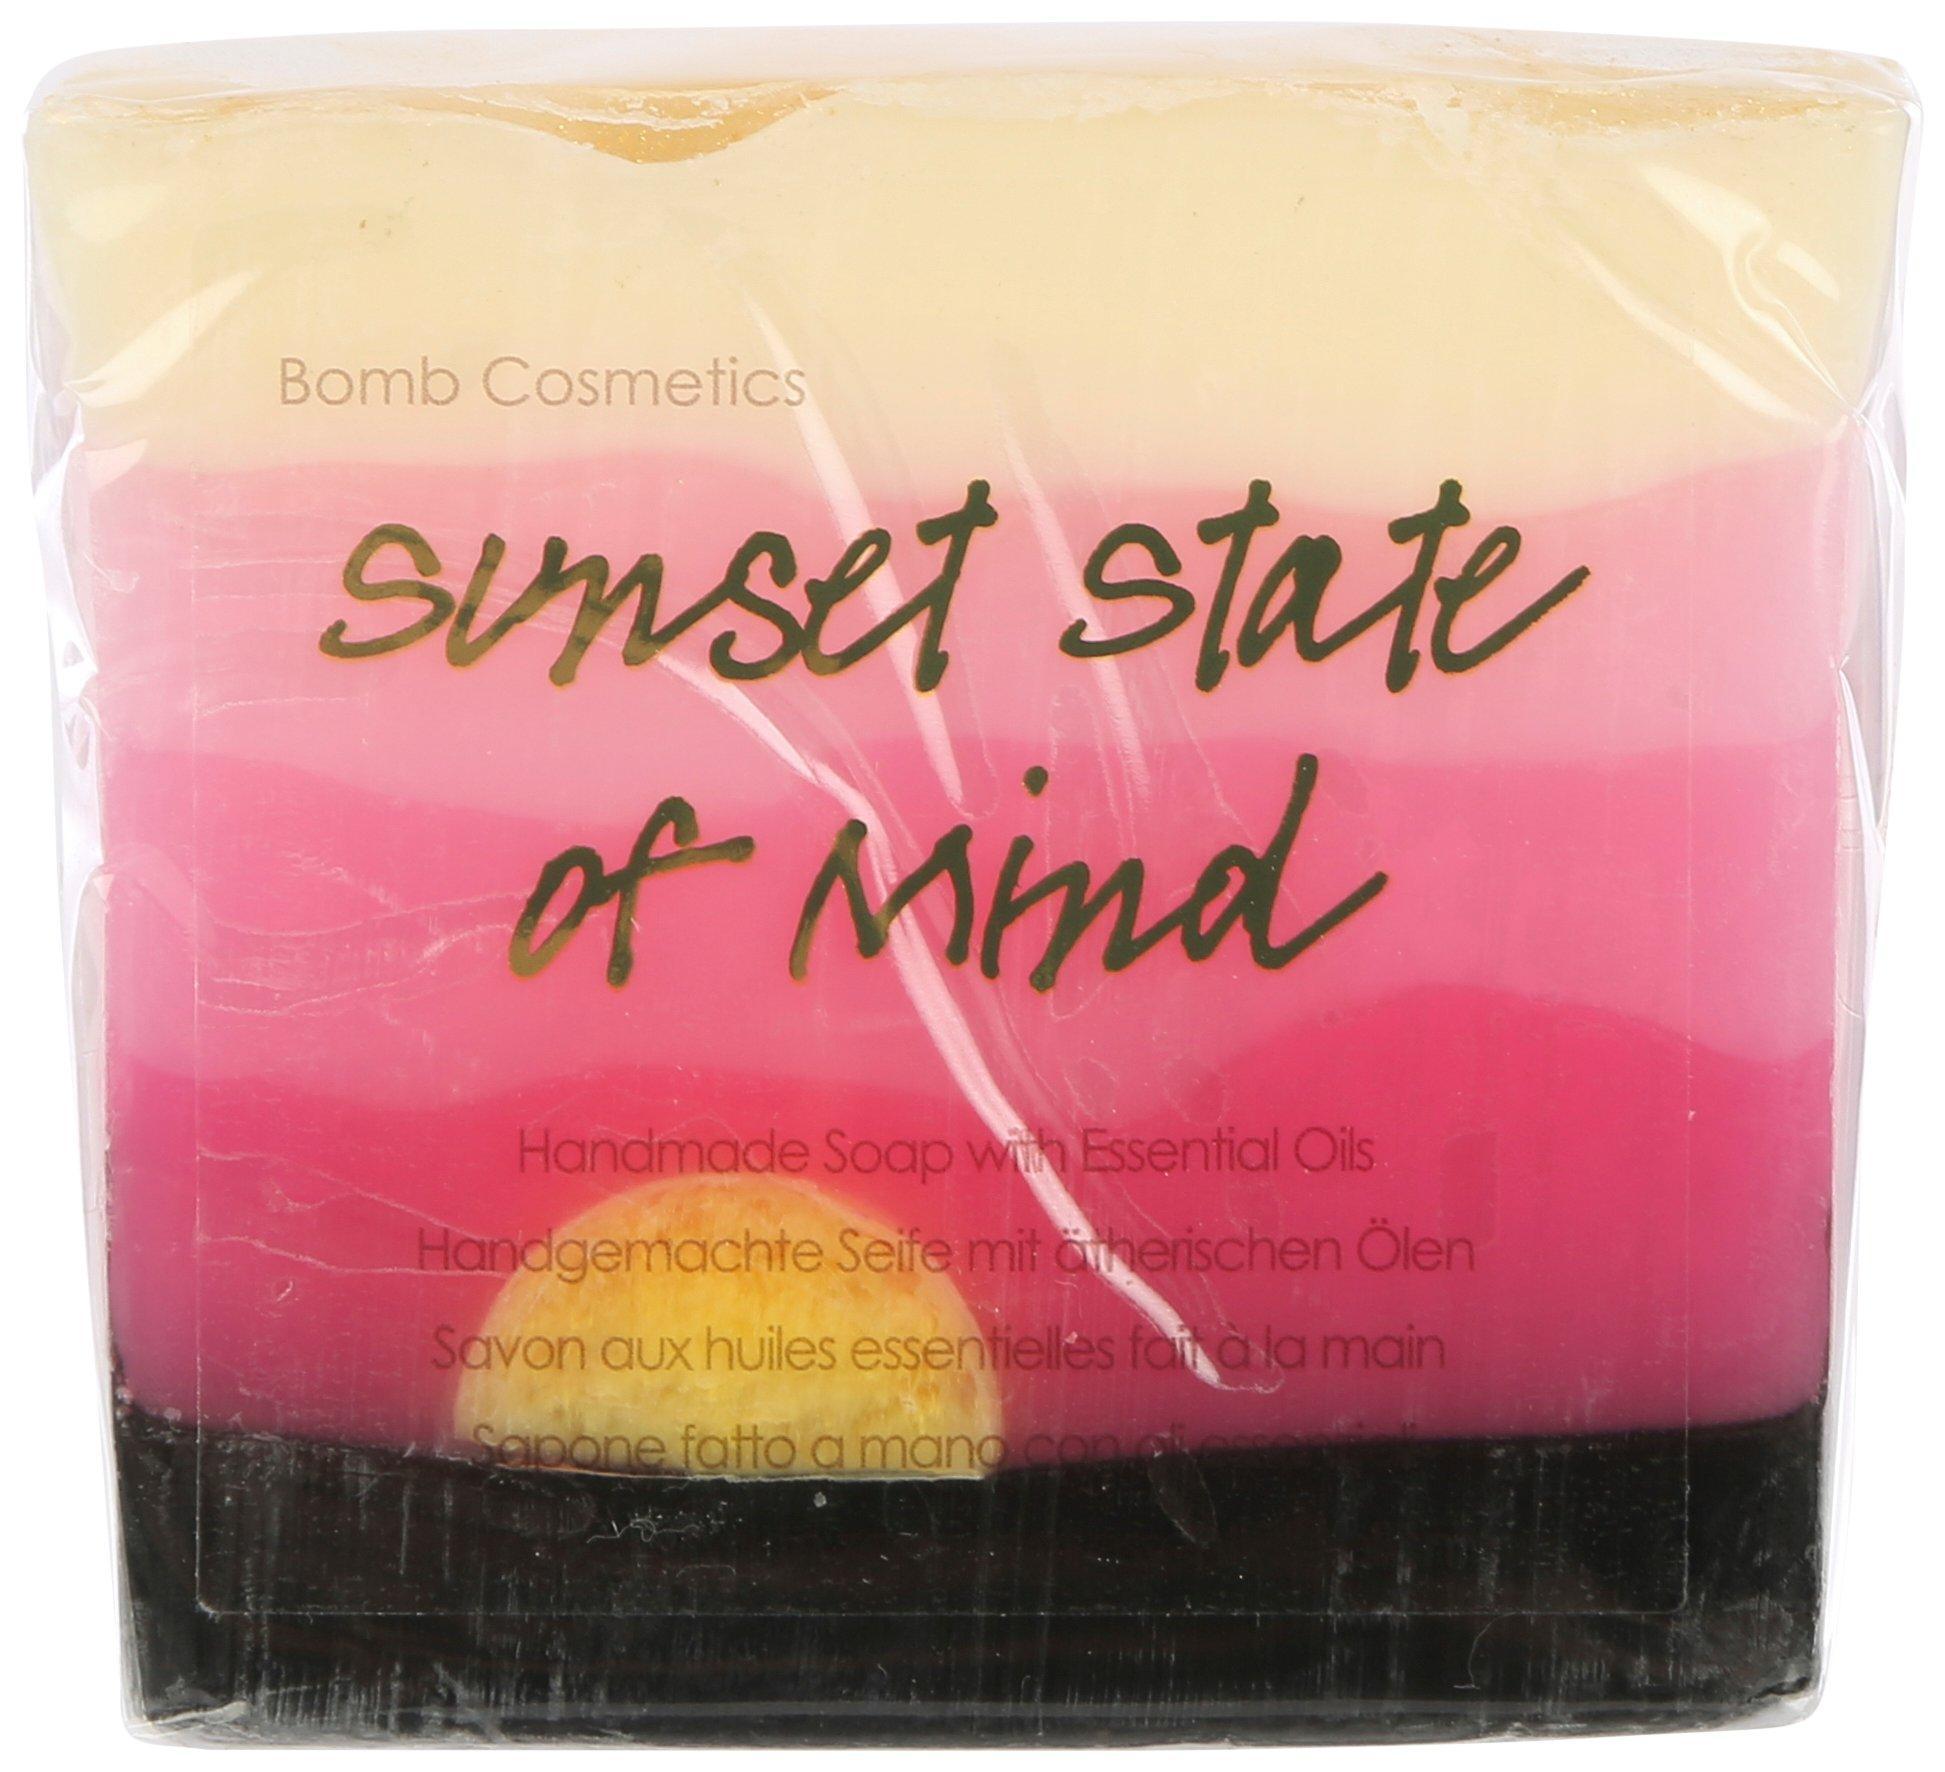 Bomb Cosmetics Sunset State Of Mind Handmade Soap 3.5 oz.